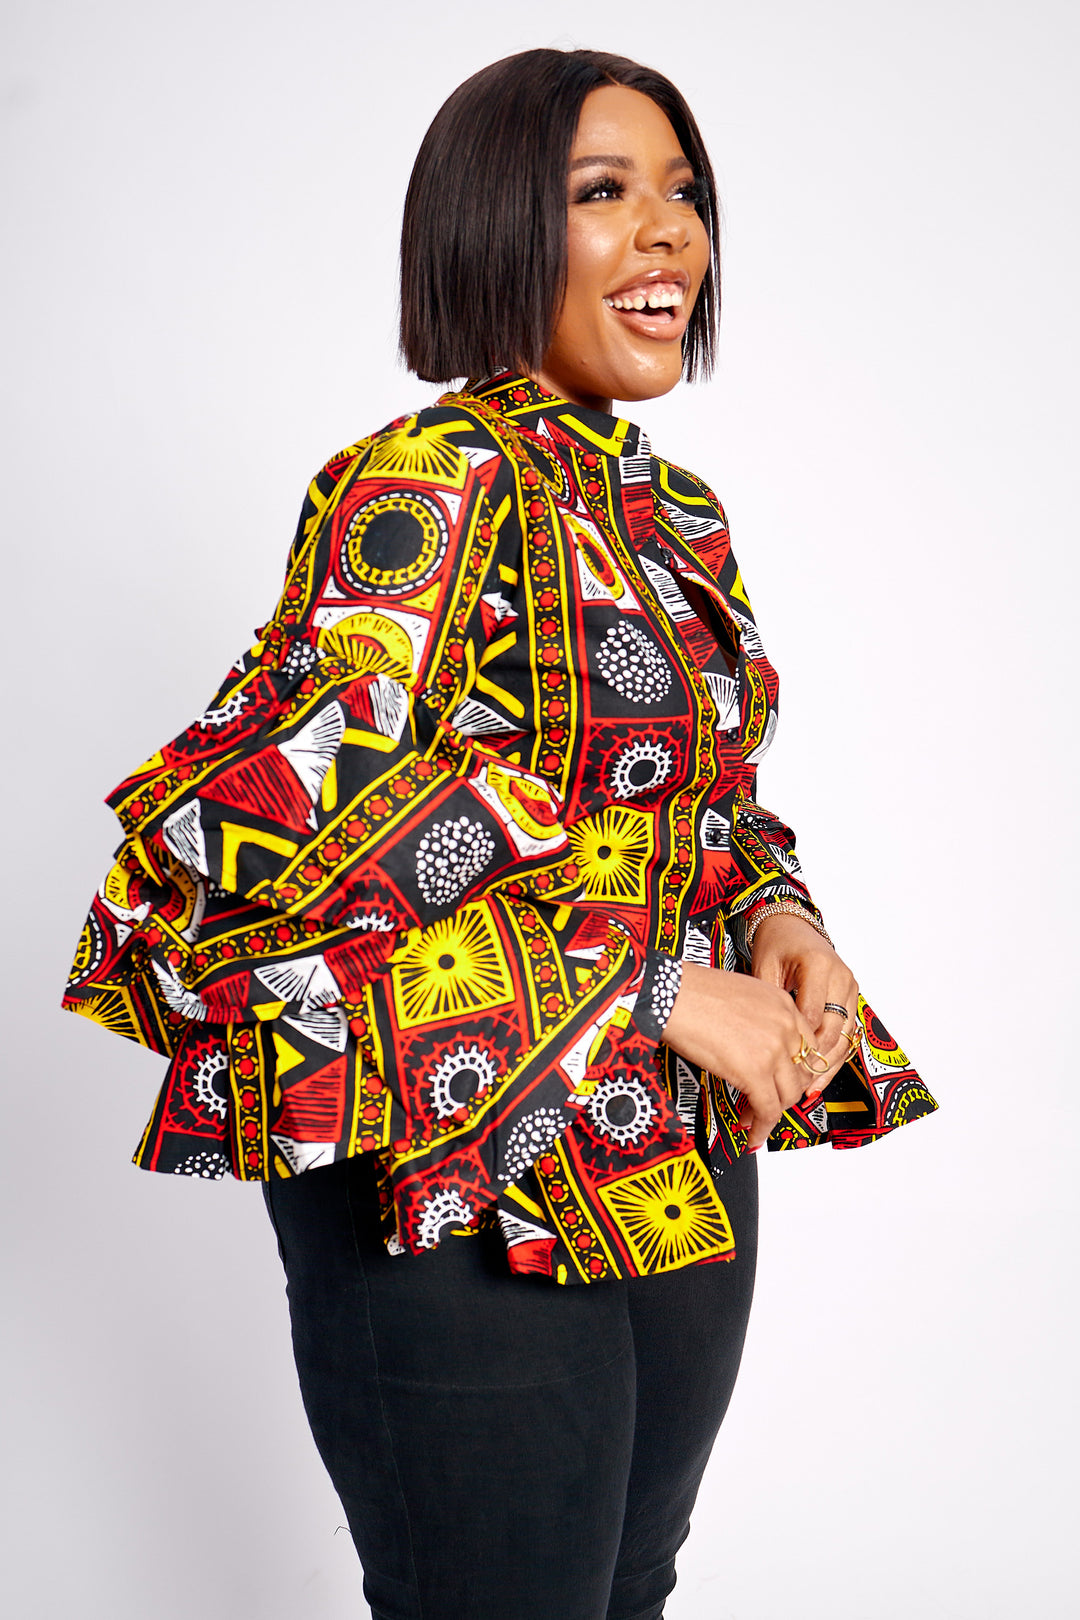 African print Tops for Women